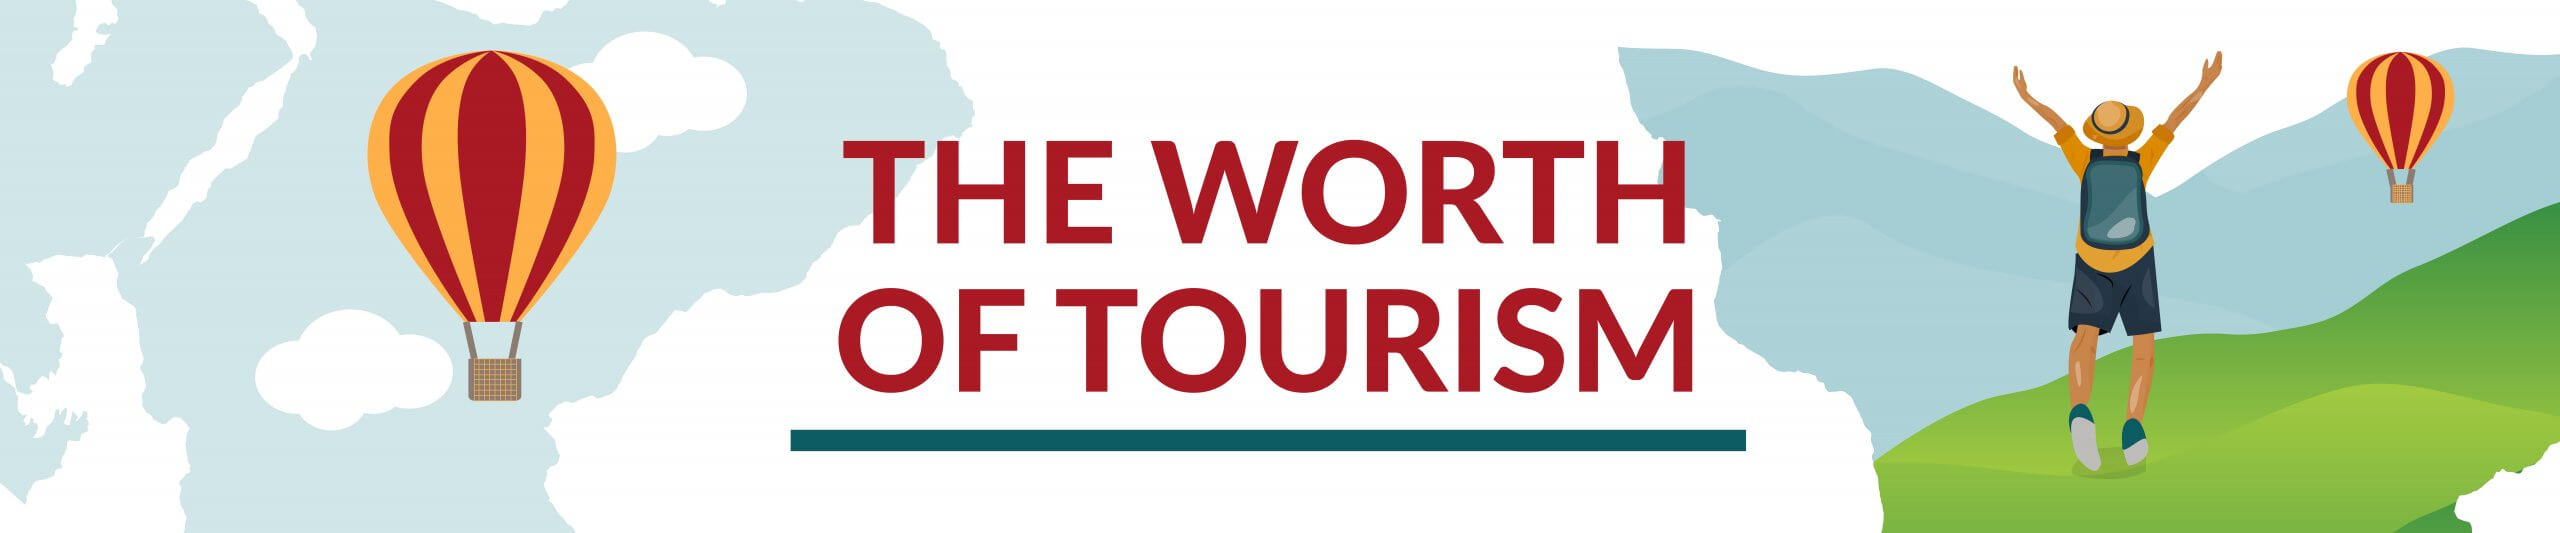 worth of tourism header